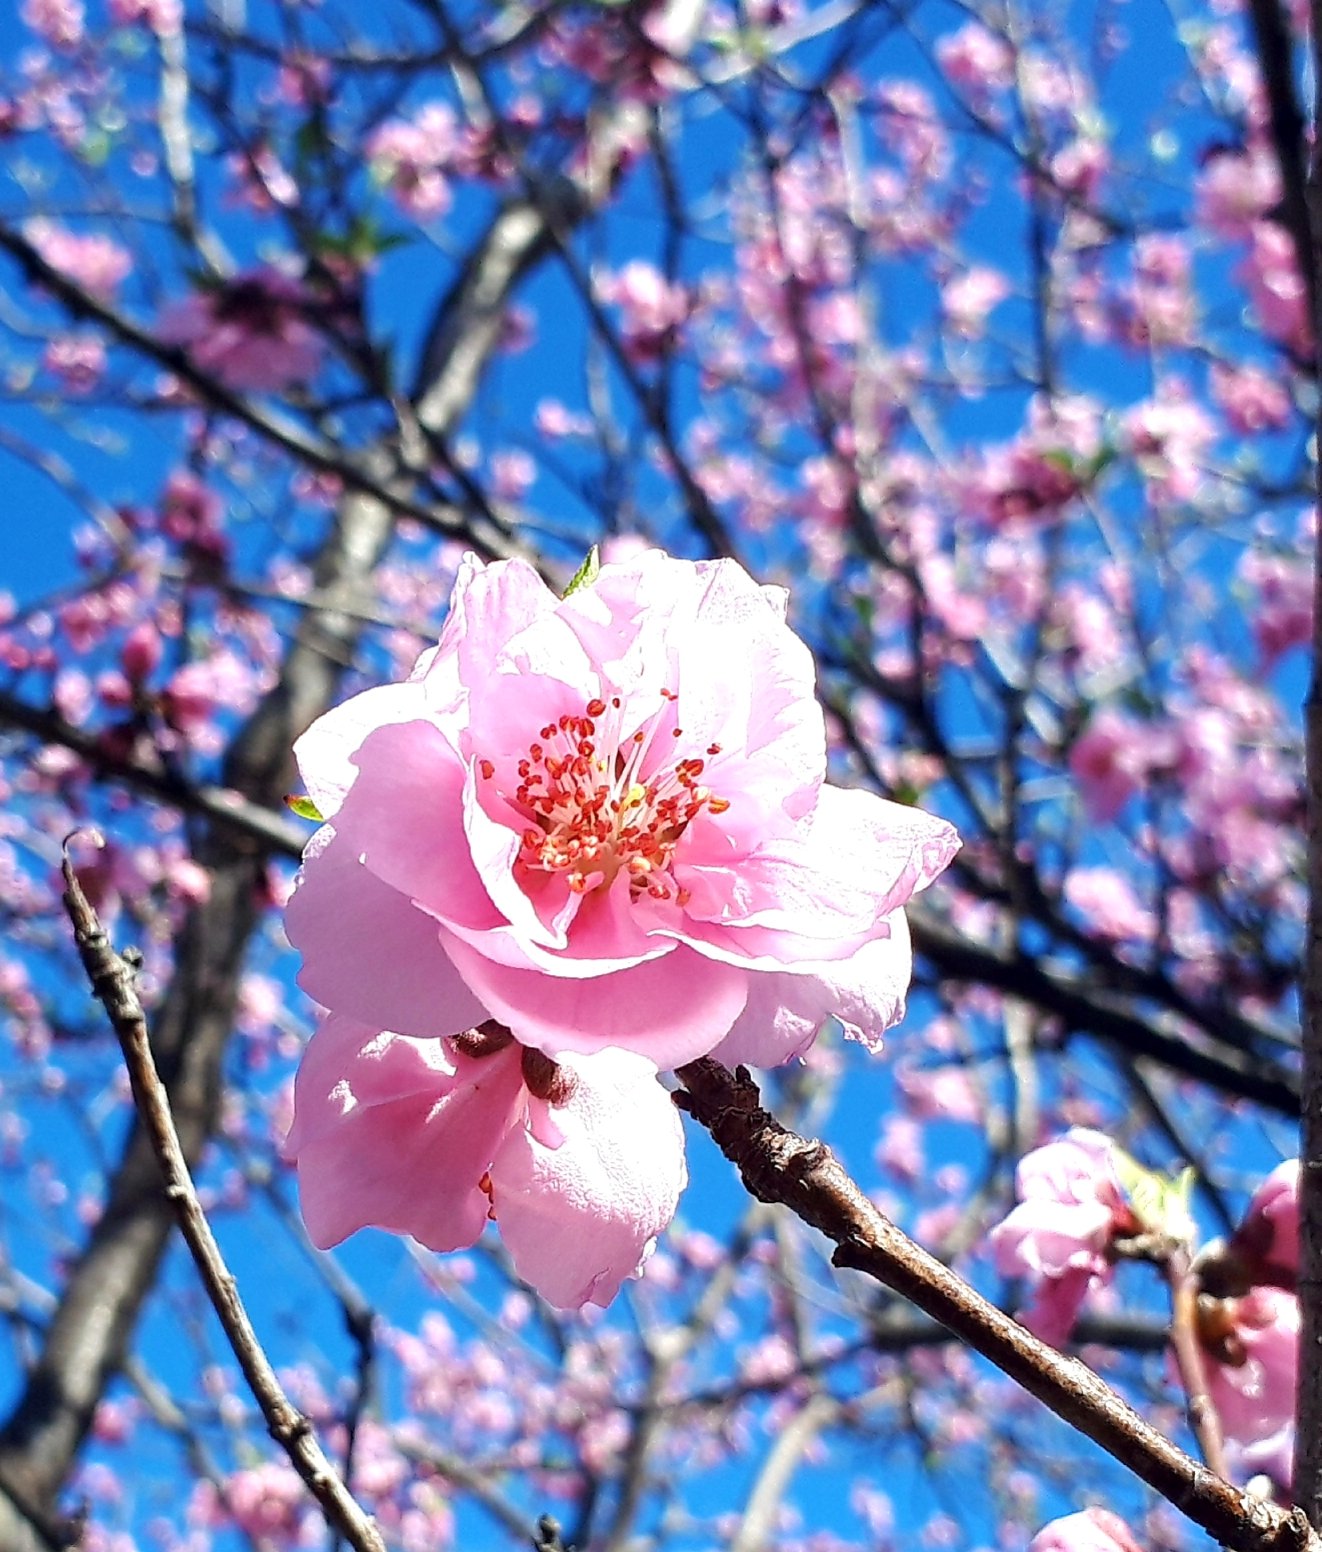 توییتر ちこり 産地直送 Fwf در توییتر おはようございます 桃の花が咲き始めました 花言葉は チャーミング 気立ての良さ 可愛い子ですね 花が好き 桃の花 花桃 花言葉 空がある風景 You39rt メルヘン同盟 T Co 7yinc5c5k9